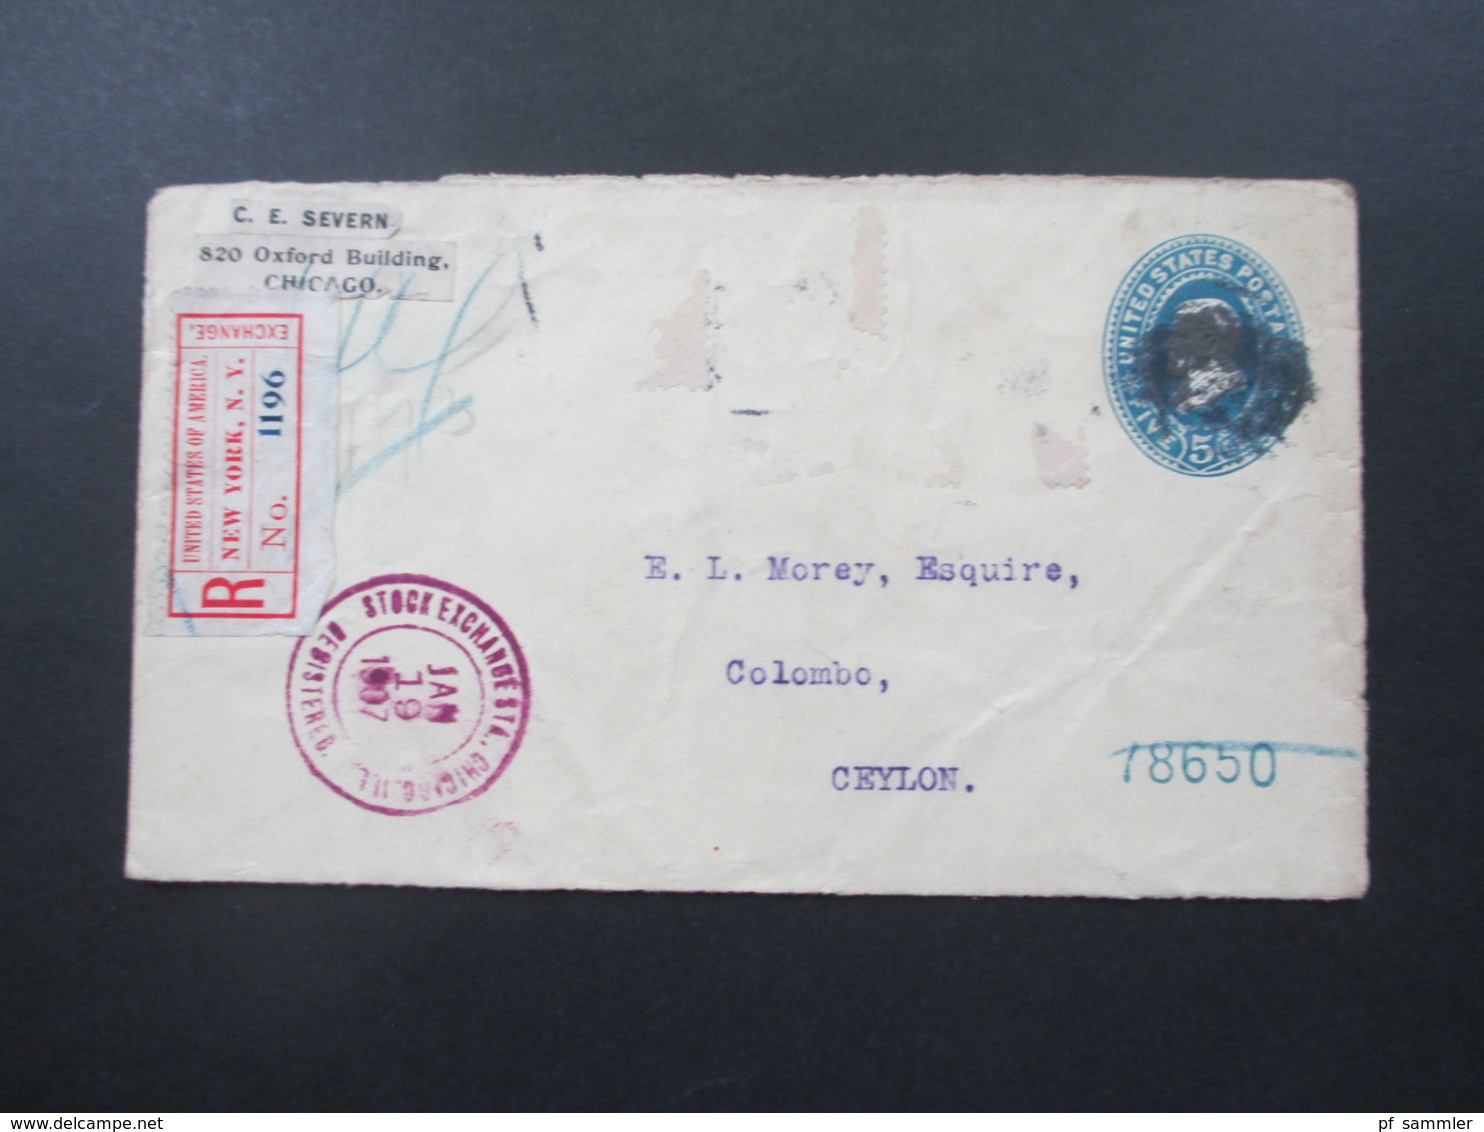 USA 1907 Registered Mail New York Exchange Und Violetter Stp. Stock Exchange Chicagi ILL. Nach Ceylon!! über London - Covers & Documents